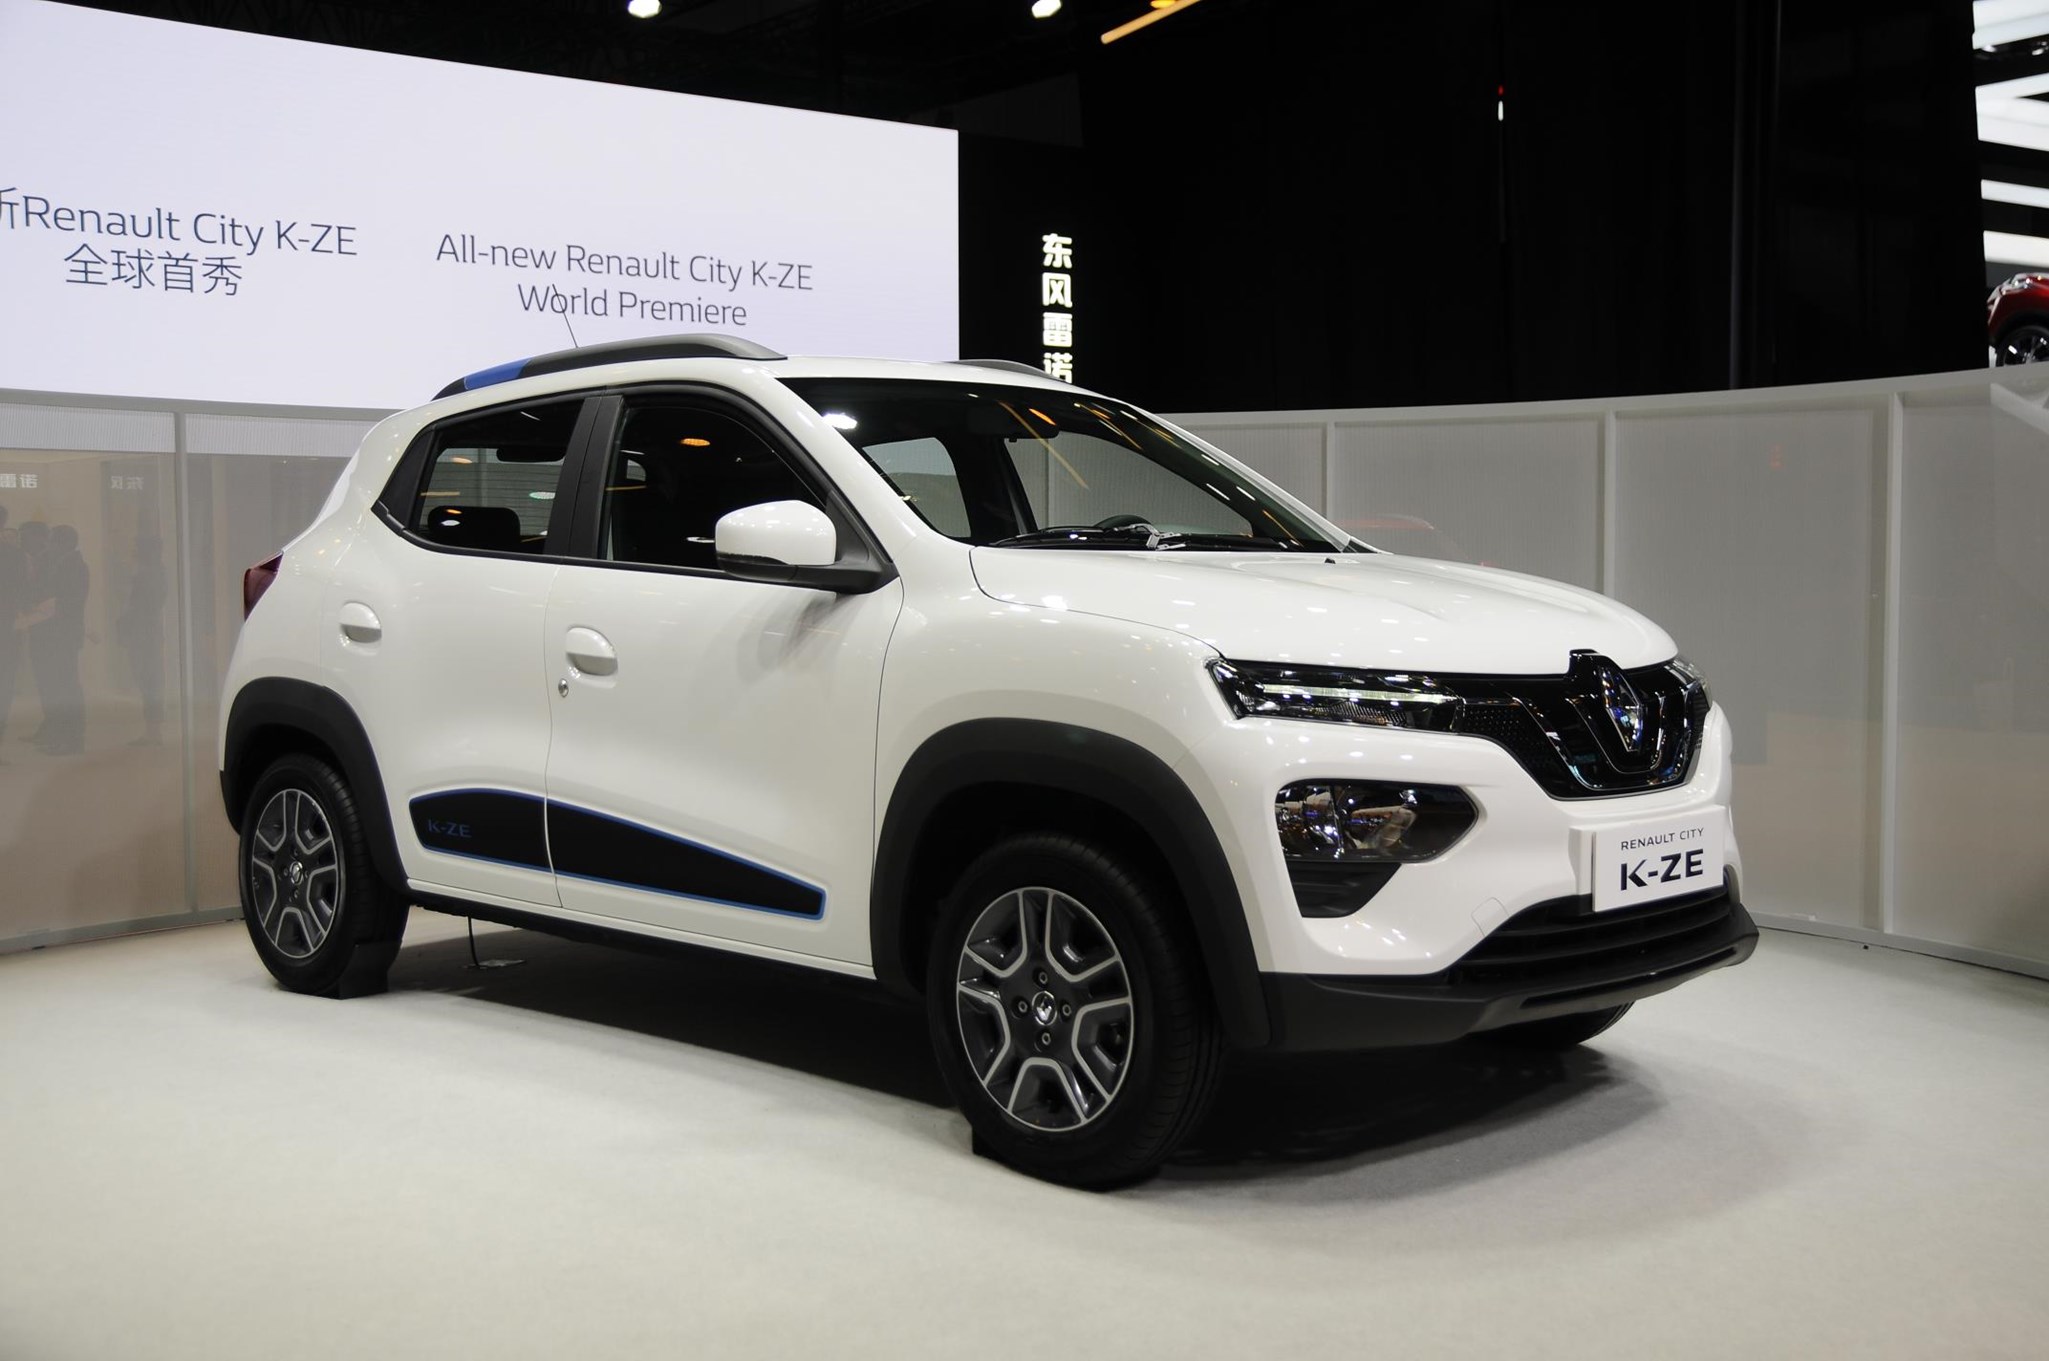  Renault  City K  ZE  bargain EV could be sold in Europe 